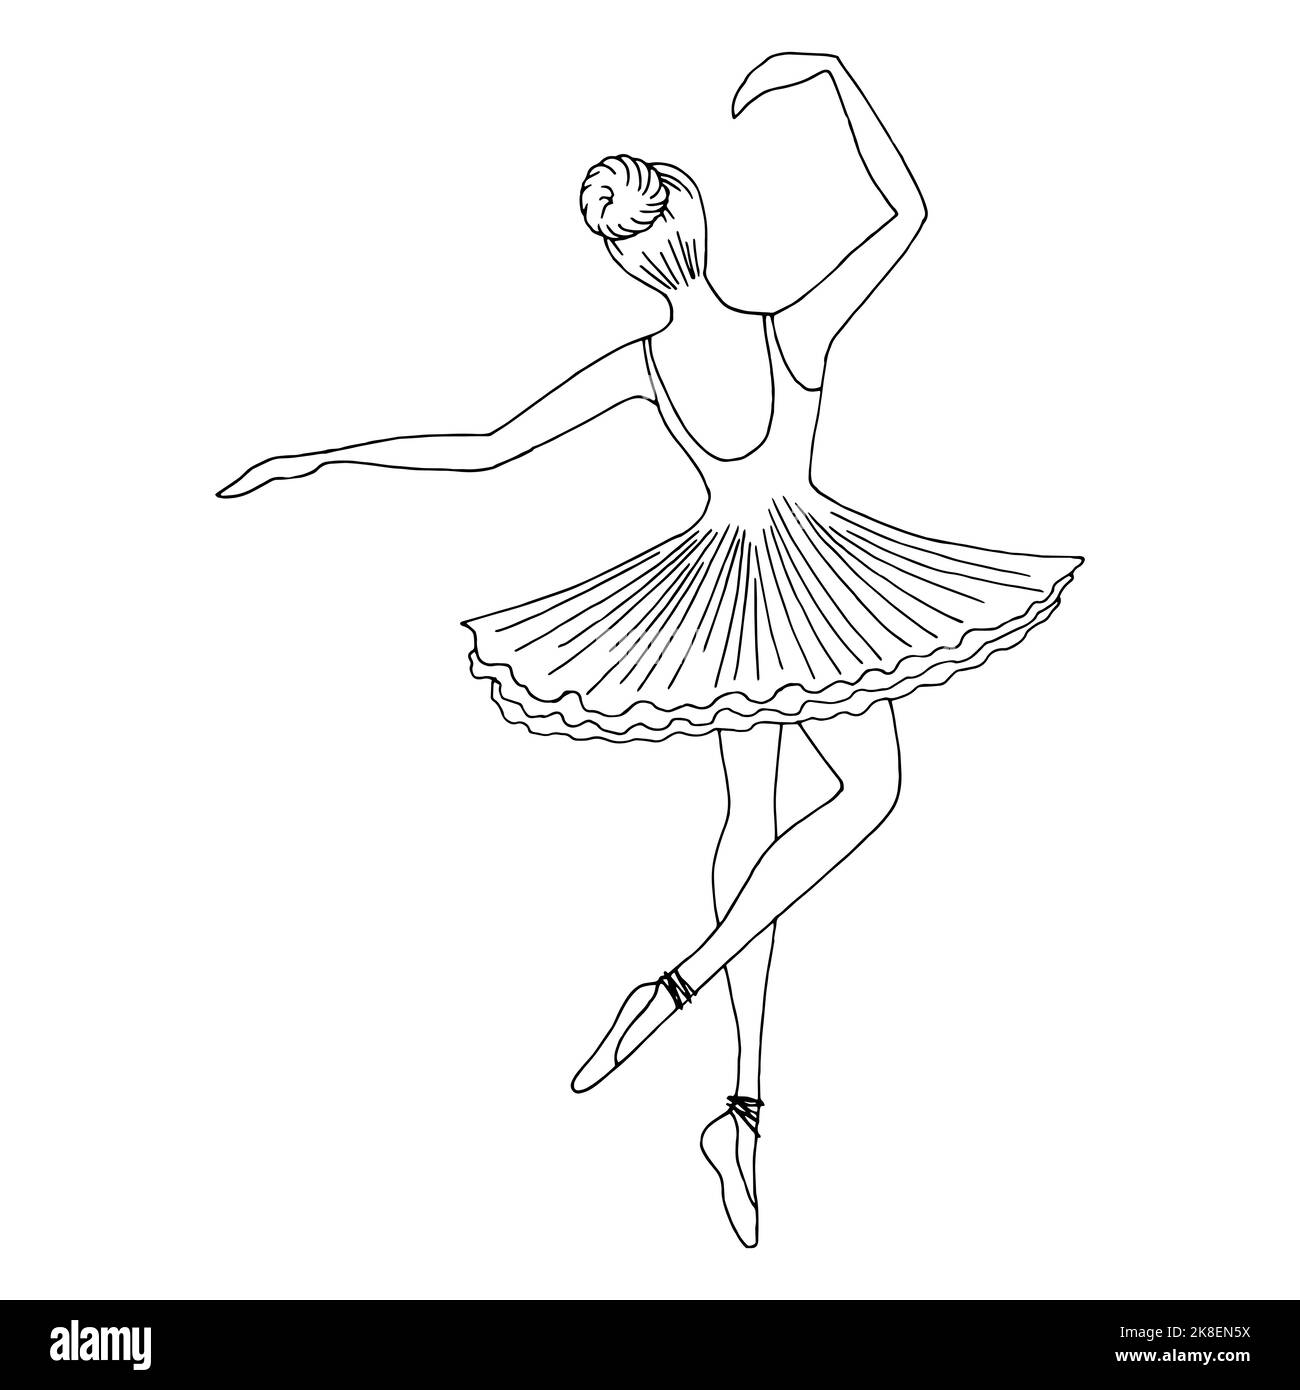 Ballerina Tänzerin Grafik schwarz weiß isoliert Skizze Illustration Vektor Stock Vektor